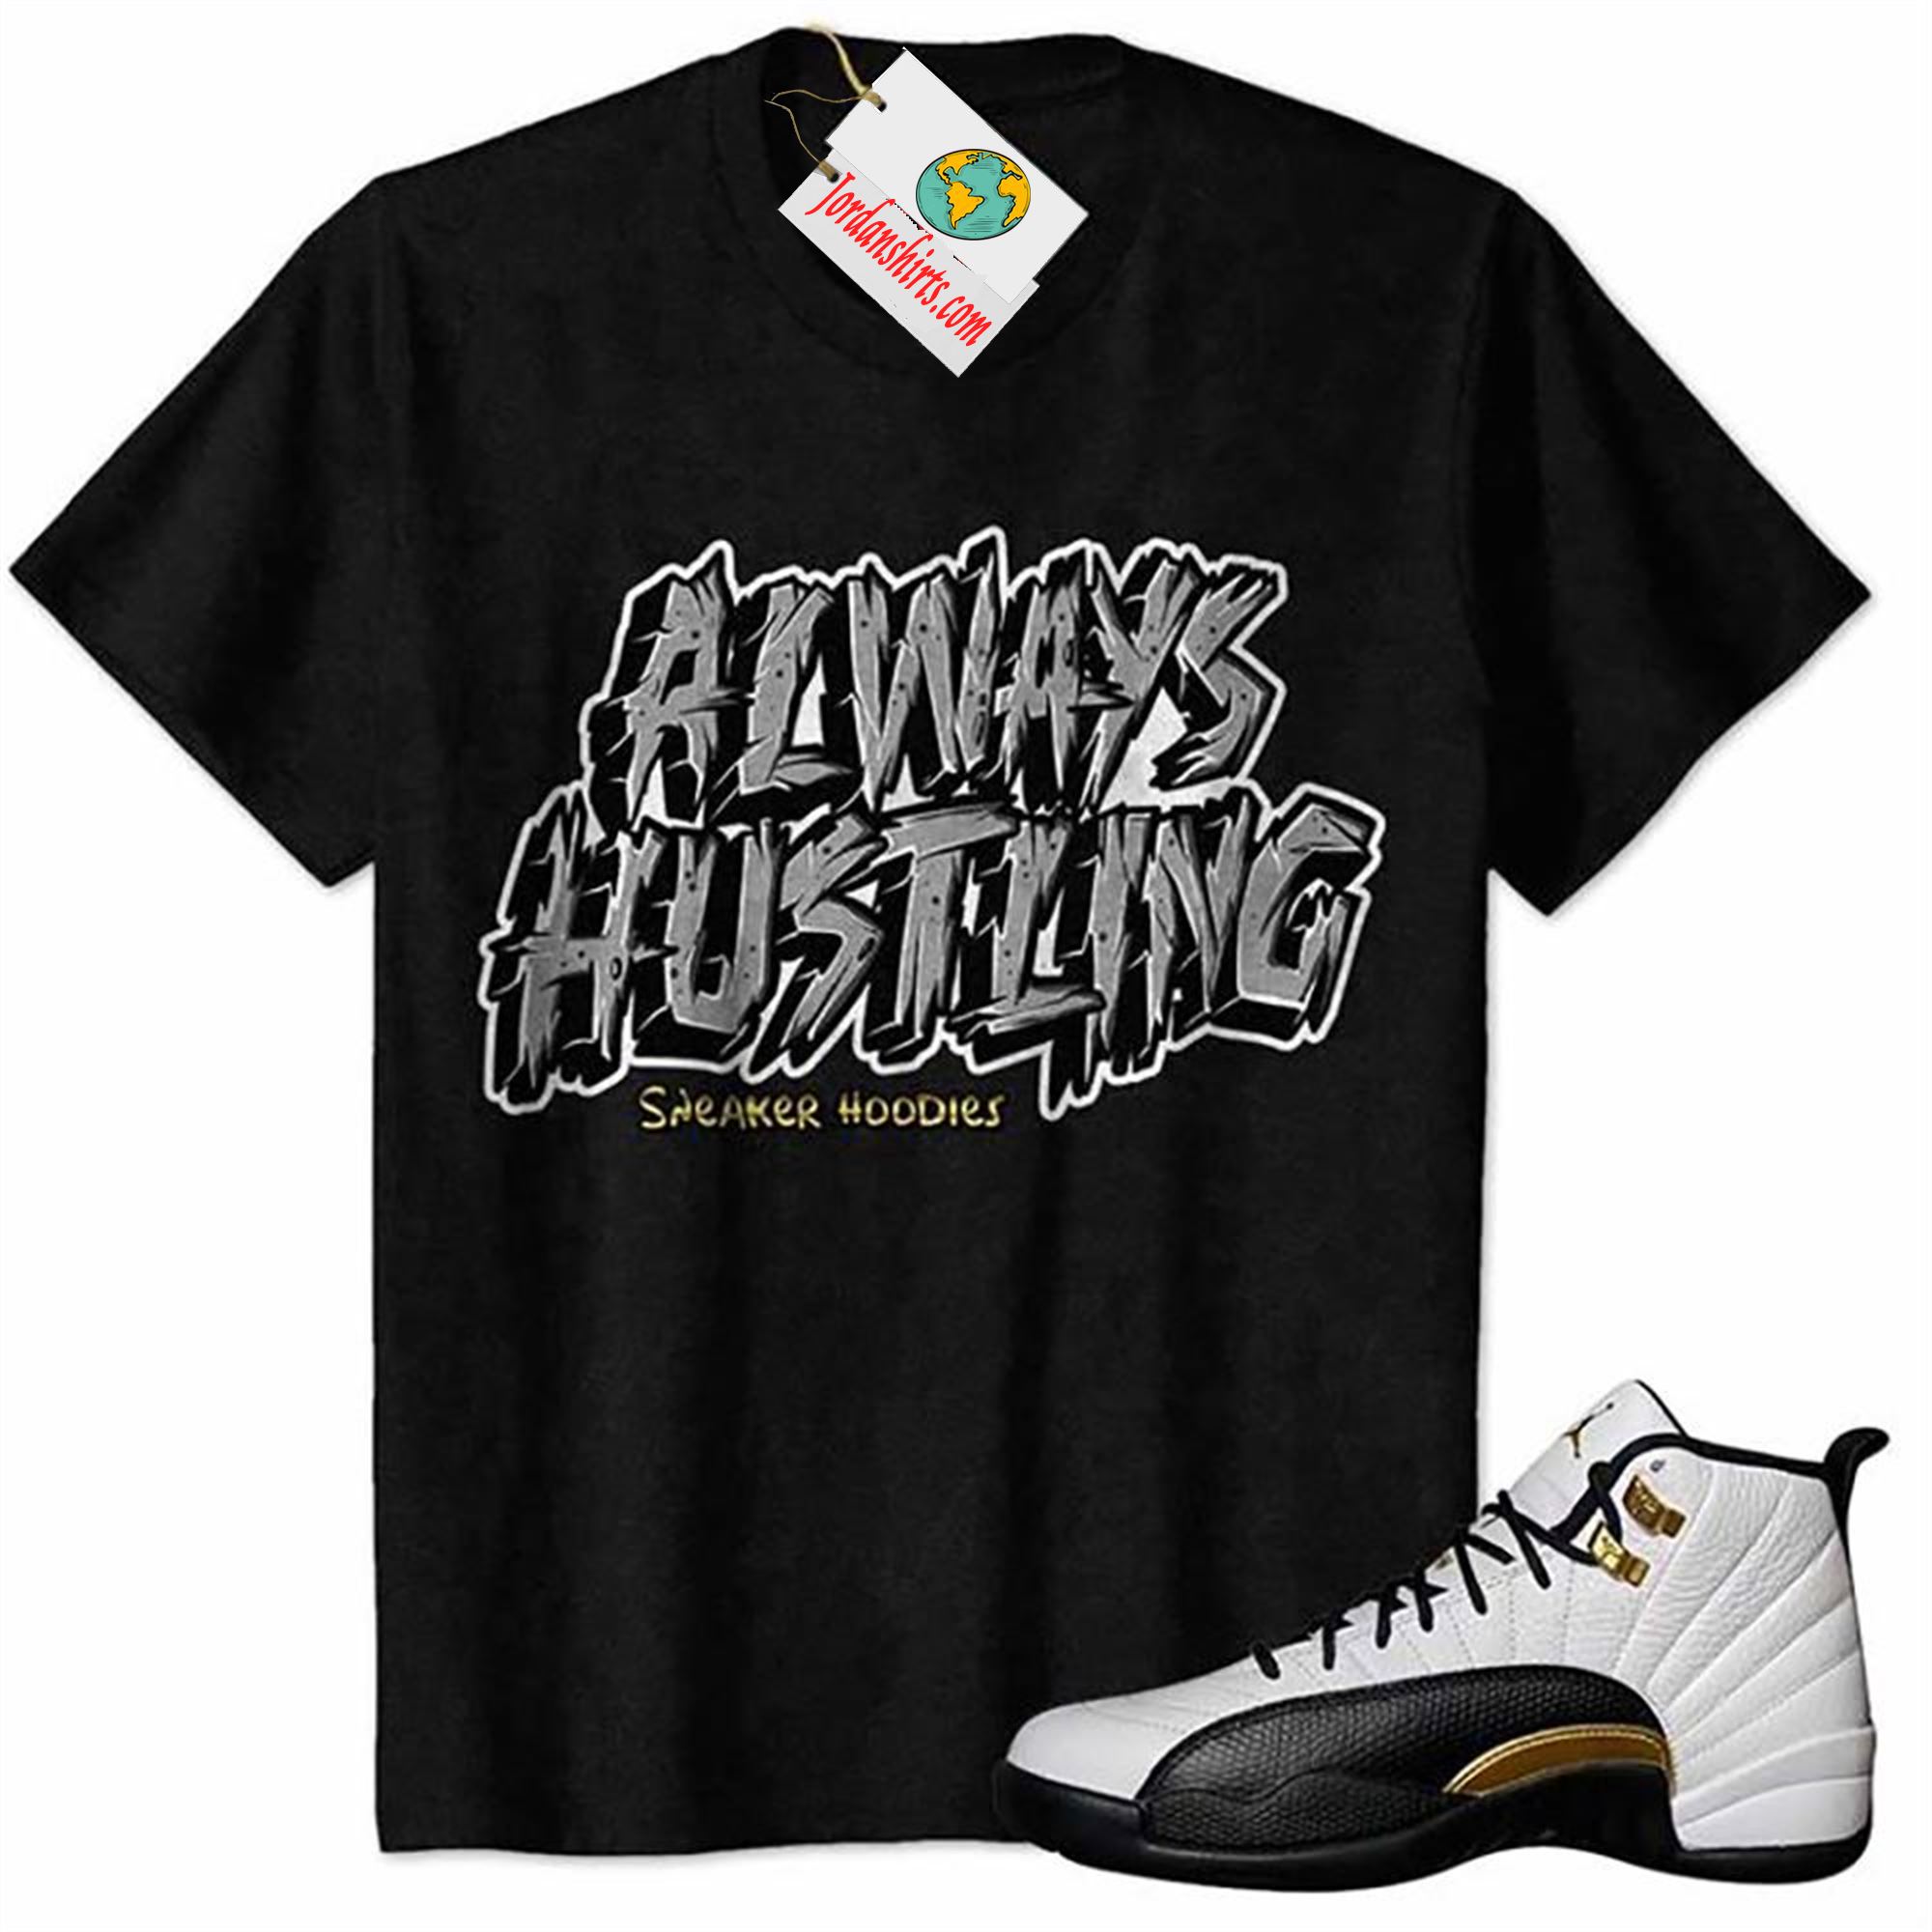 Jordan 12 Shirt, Allway Hustling Hustle Black Air Jordan 12 Royalty 12s Full Size Up To 5xl